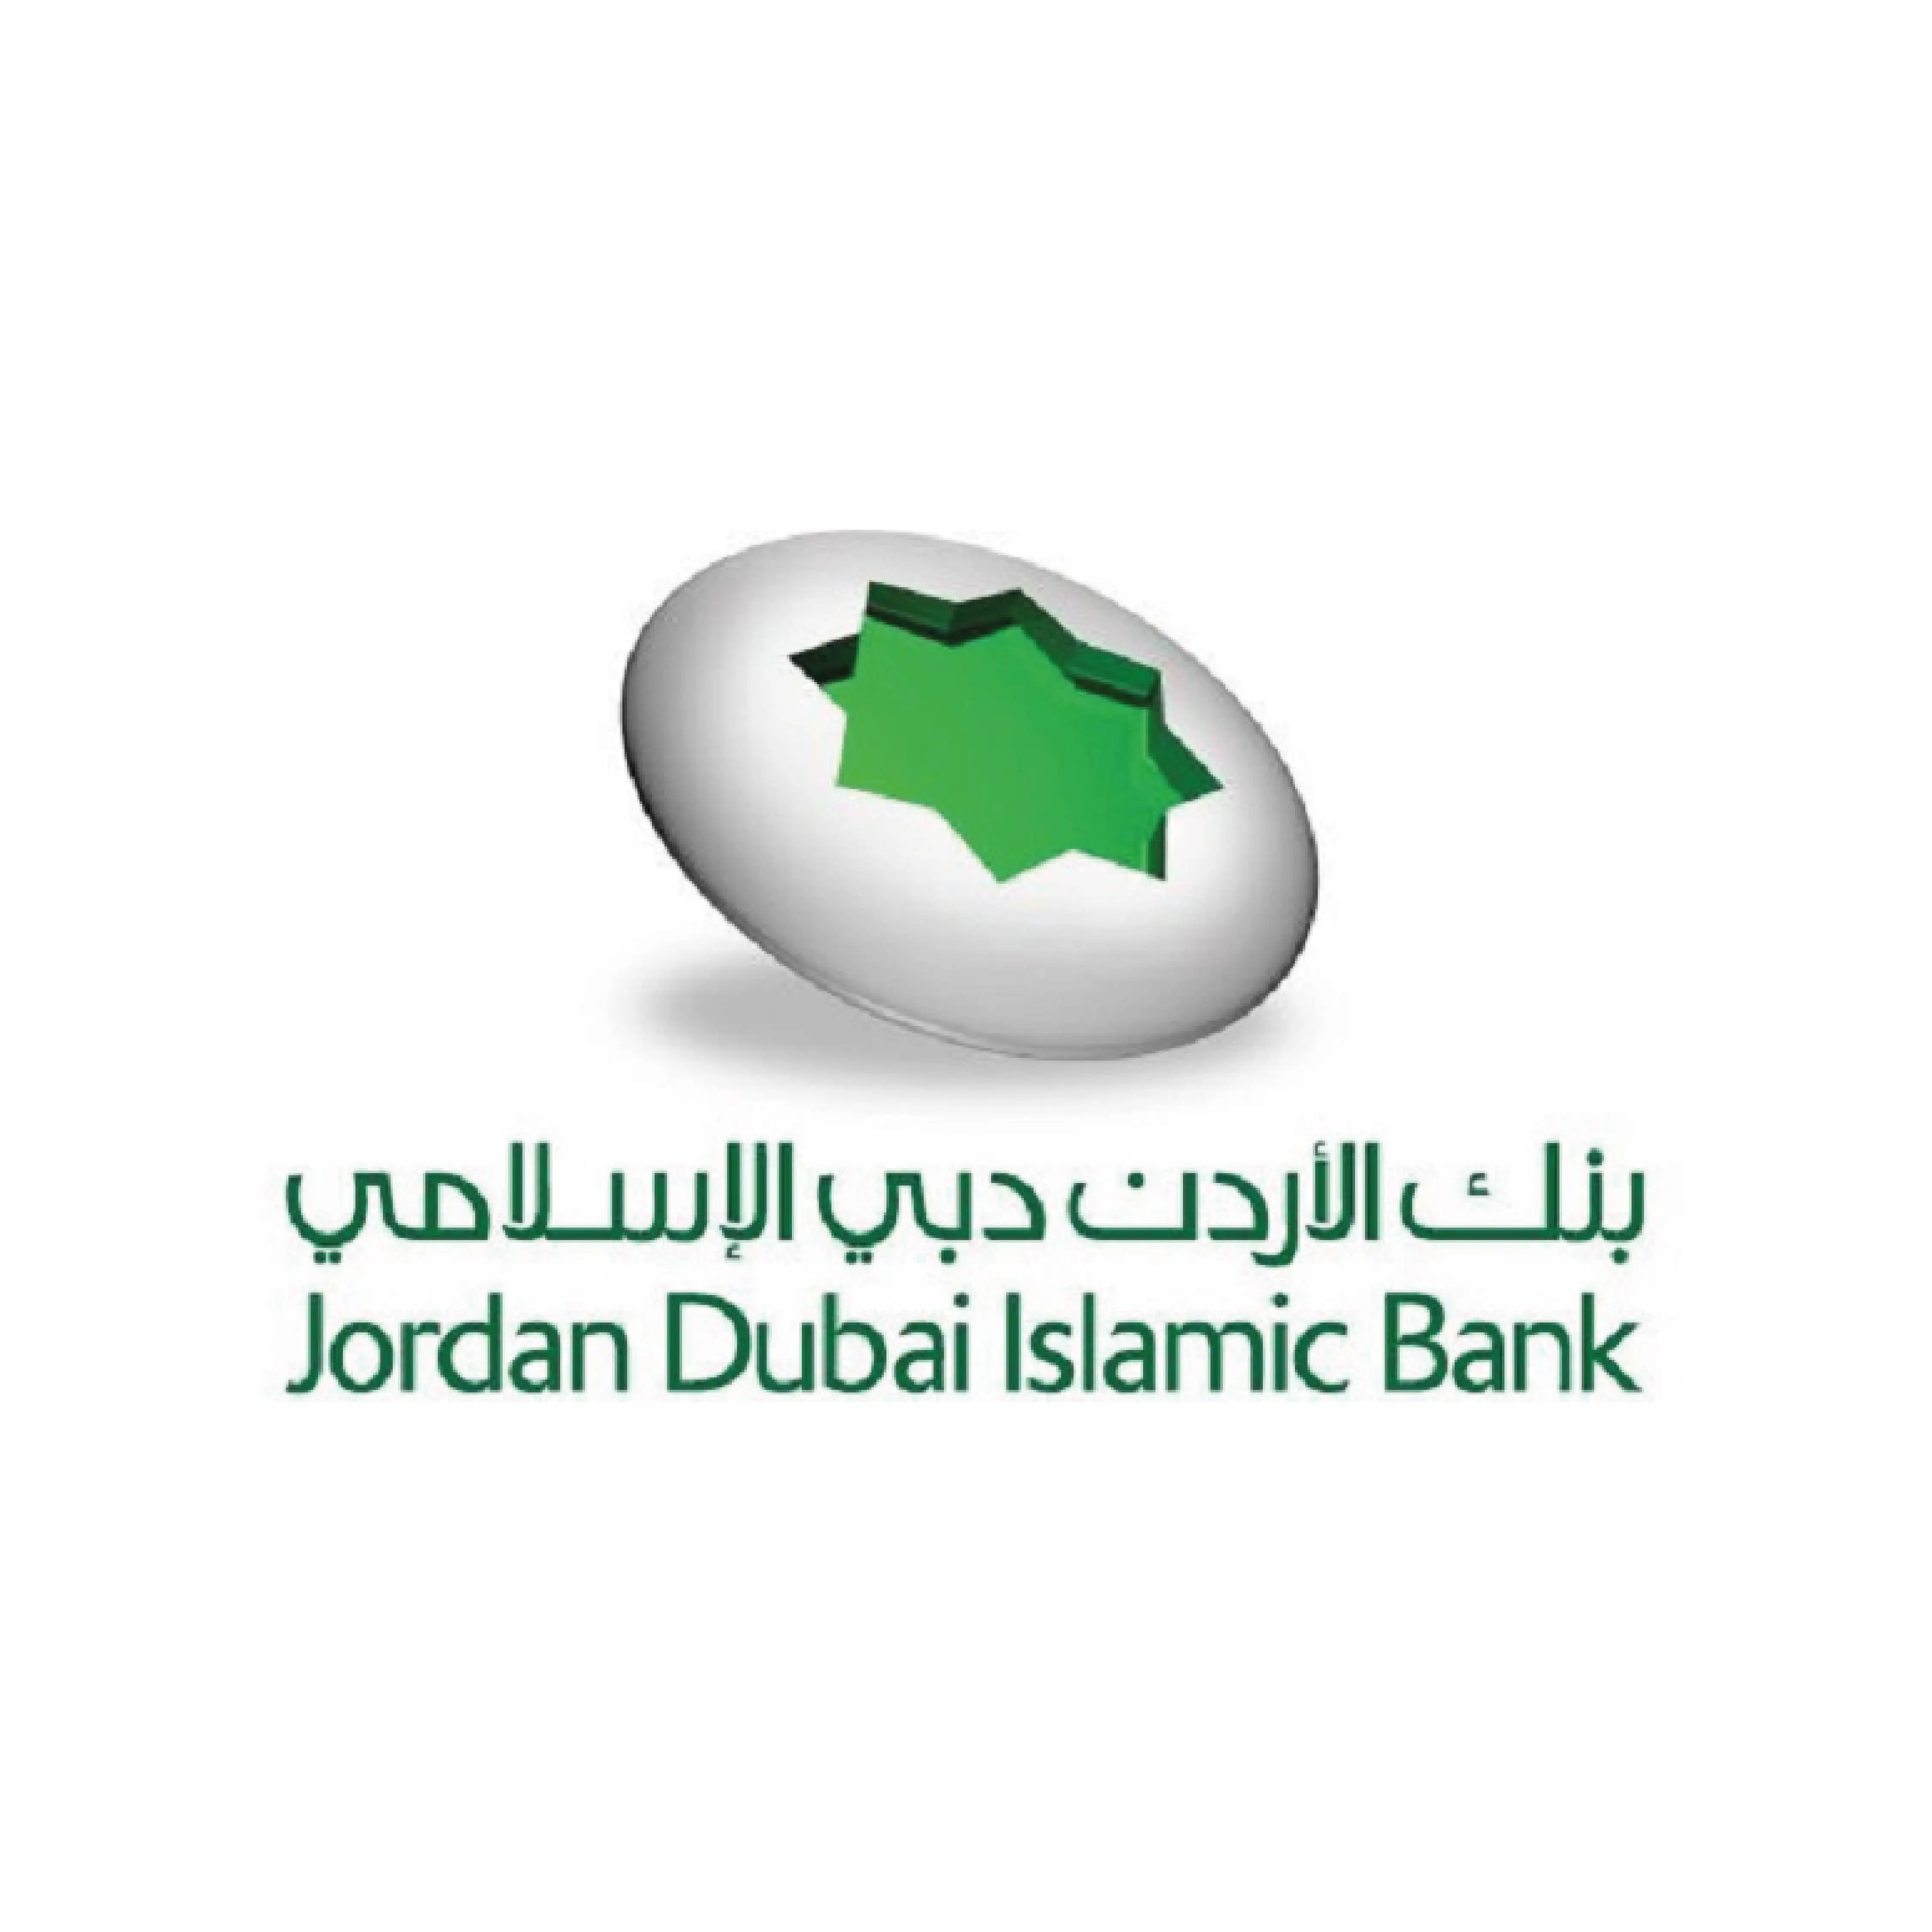 JORDAN ISALIMC BANK